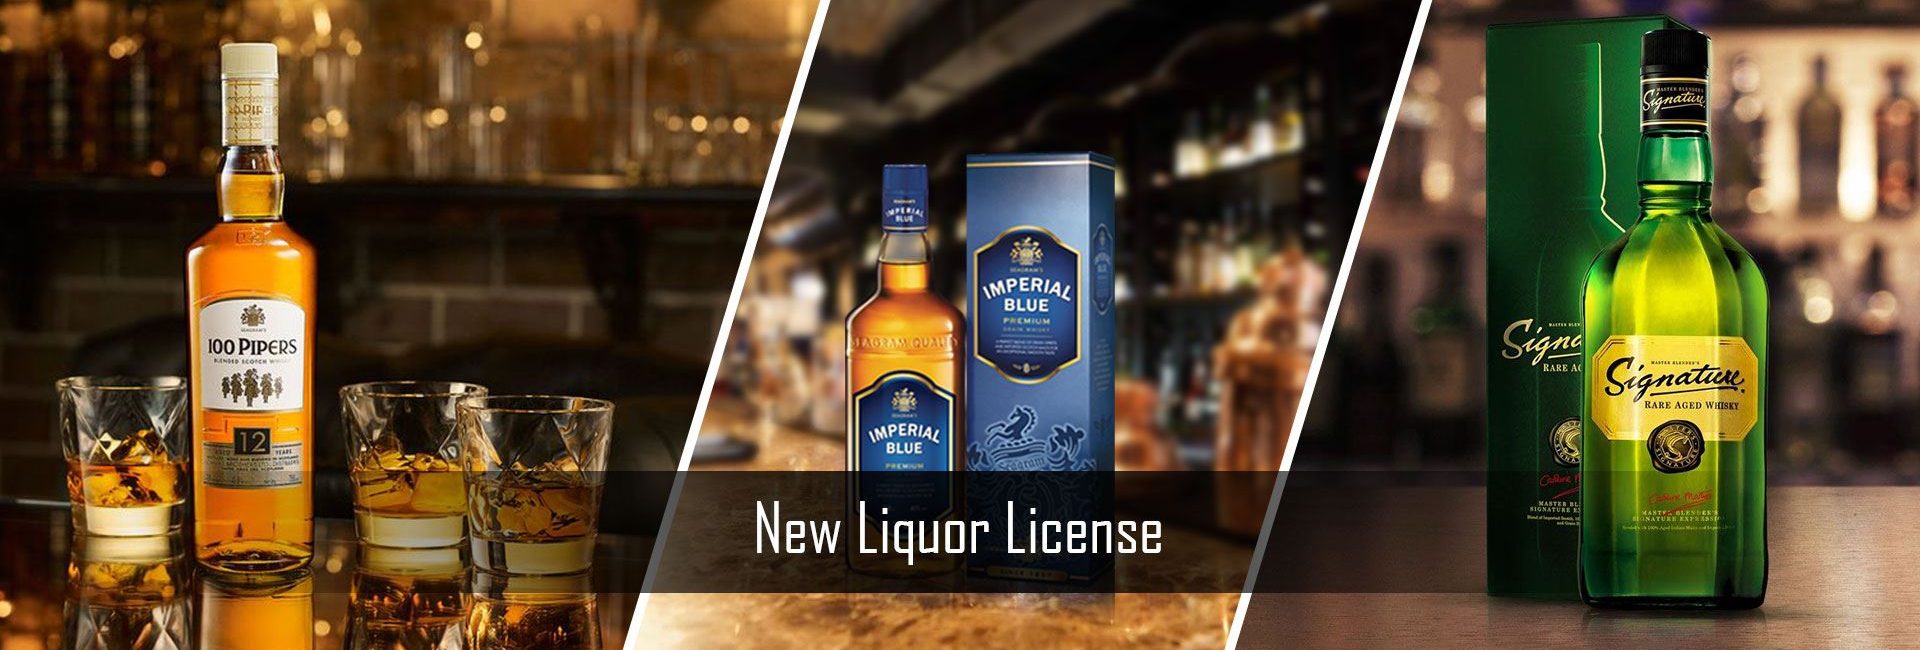 The method to obtain liquor license in India